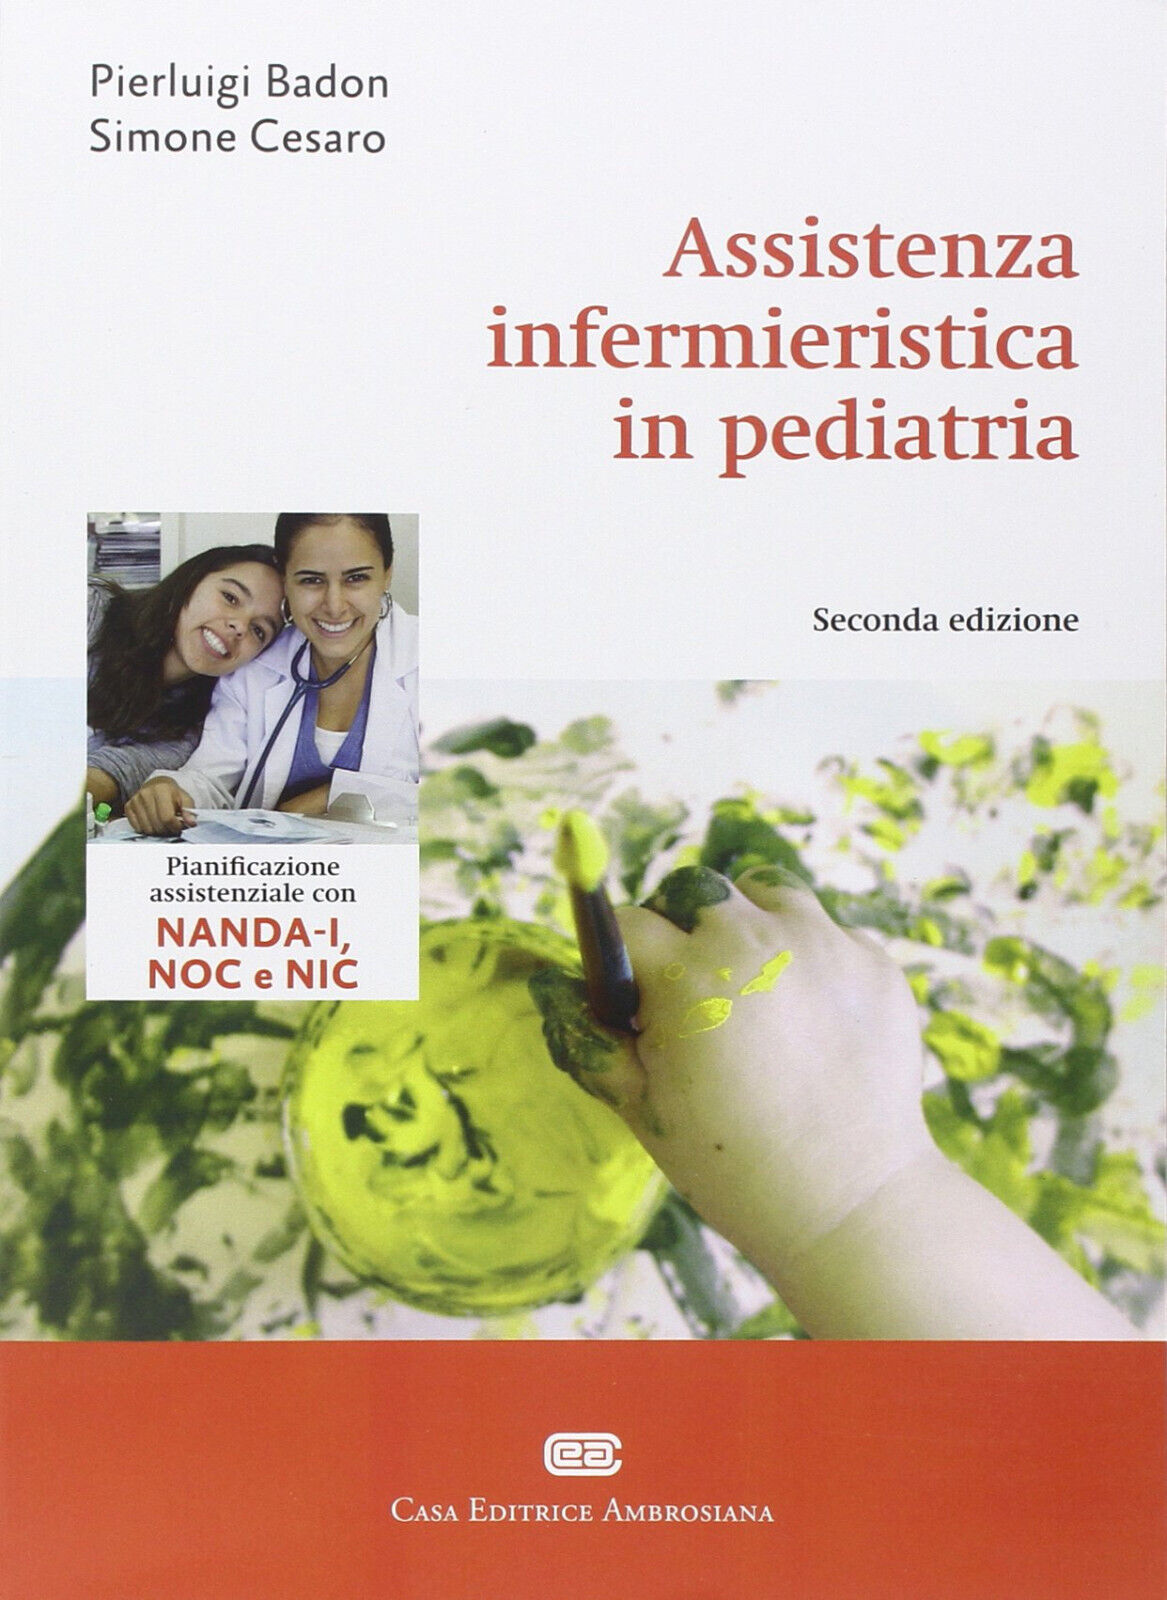 Assistenza infermieristica in pediatria - Pierluigi Badon, Simone Cesaro - 2015